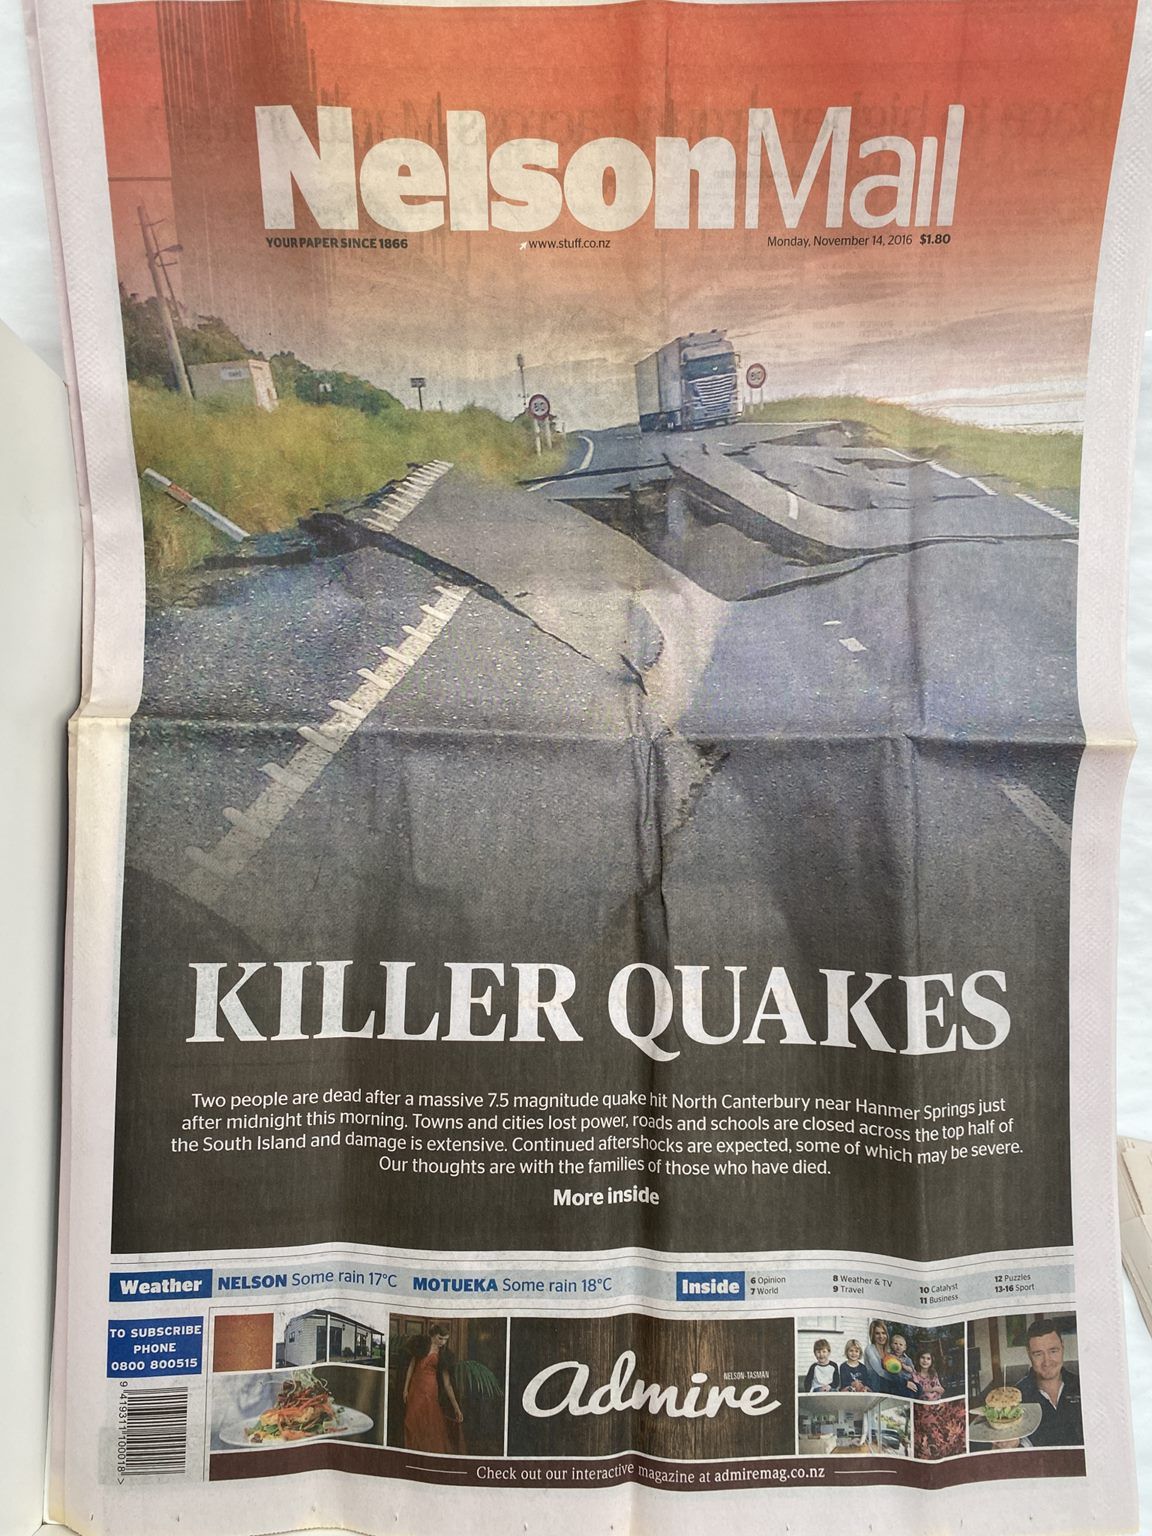 OLD NEWSPAPER: The Nelson Mail, 14 November 2016 - Kaikoura earthquakes